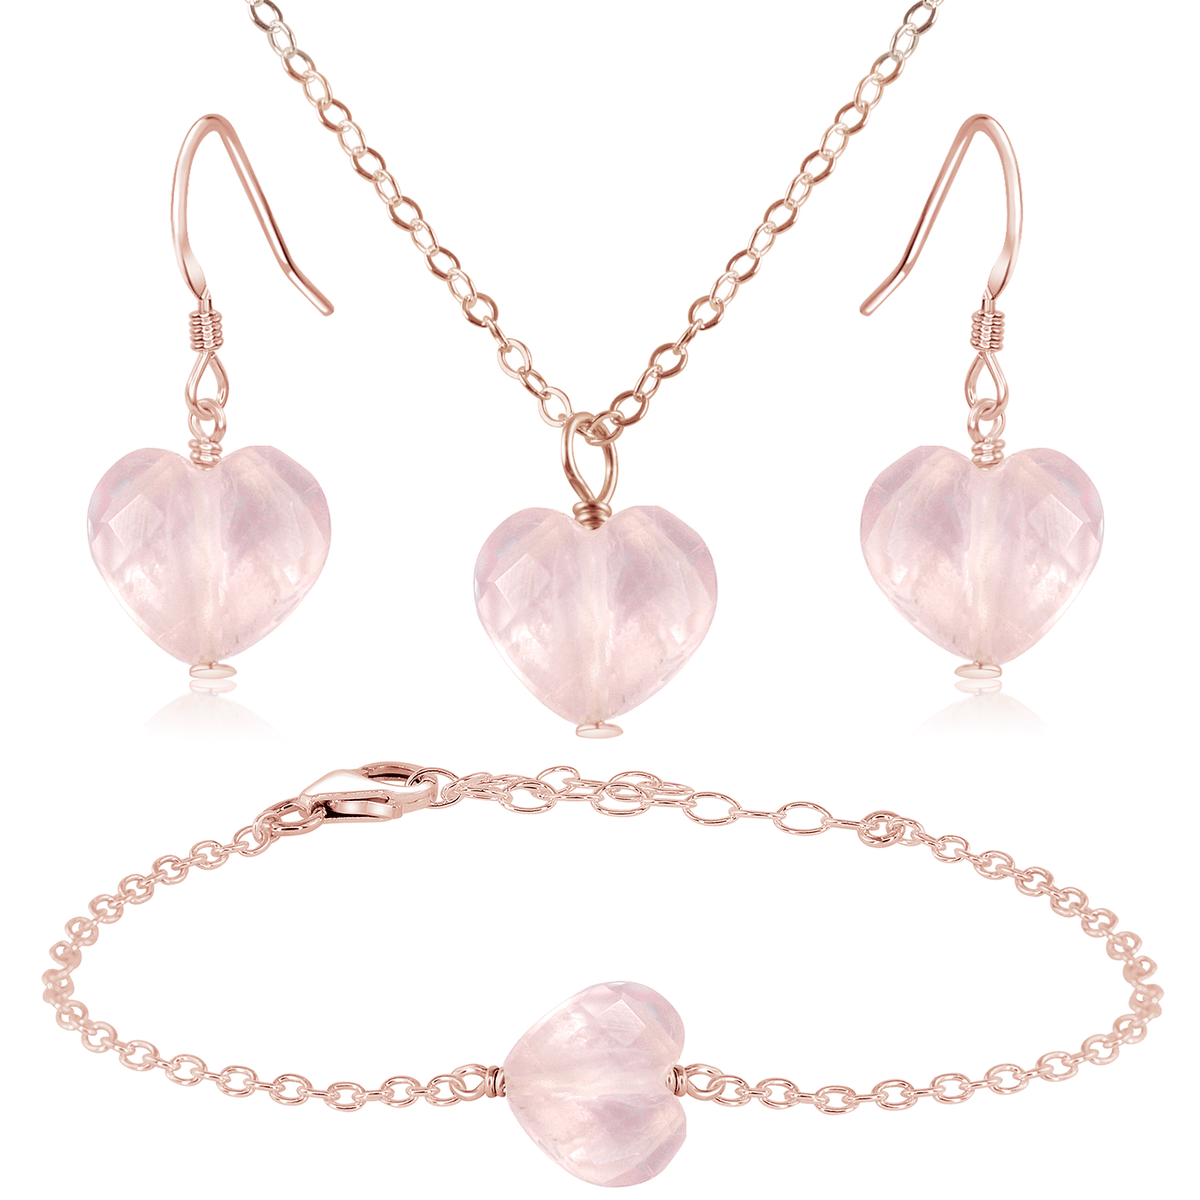 Rose Quartz Crystal Heart Jewellery Set - Rose Quartz Crystal Heart Jewellery Set - 14k Rose Gold Fill / Cable / Necklace & Earrings & Bracelet - Luna Tide Handmade Crystal Jewellery